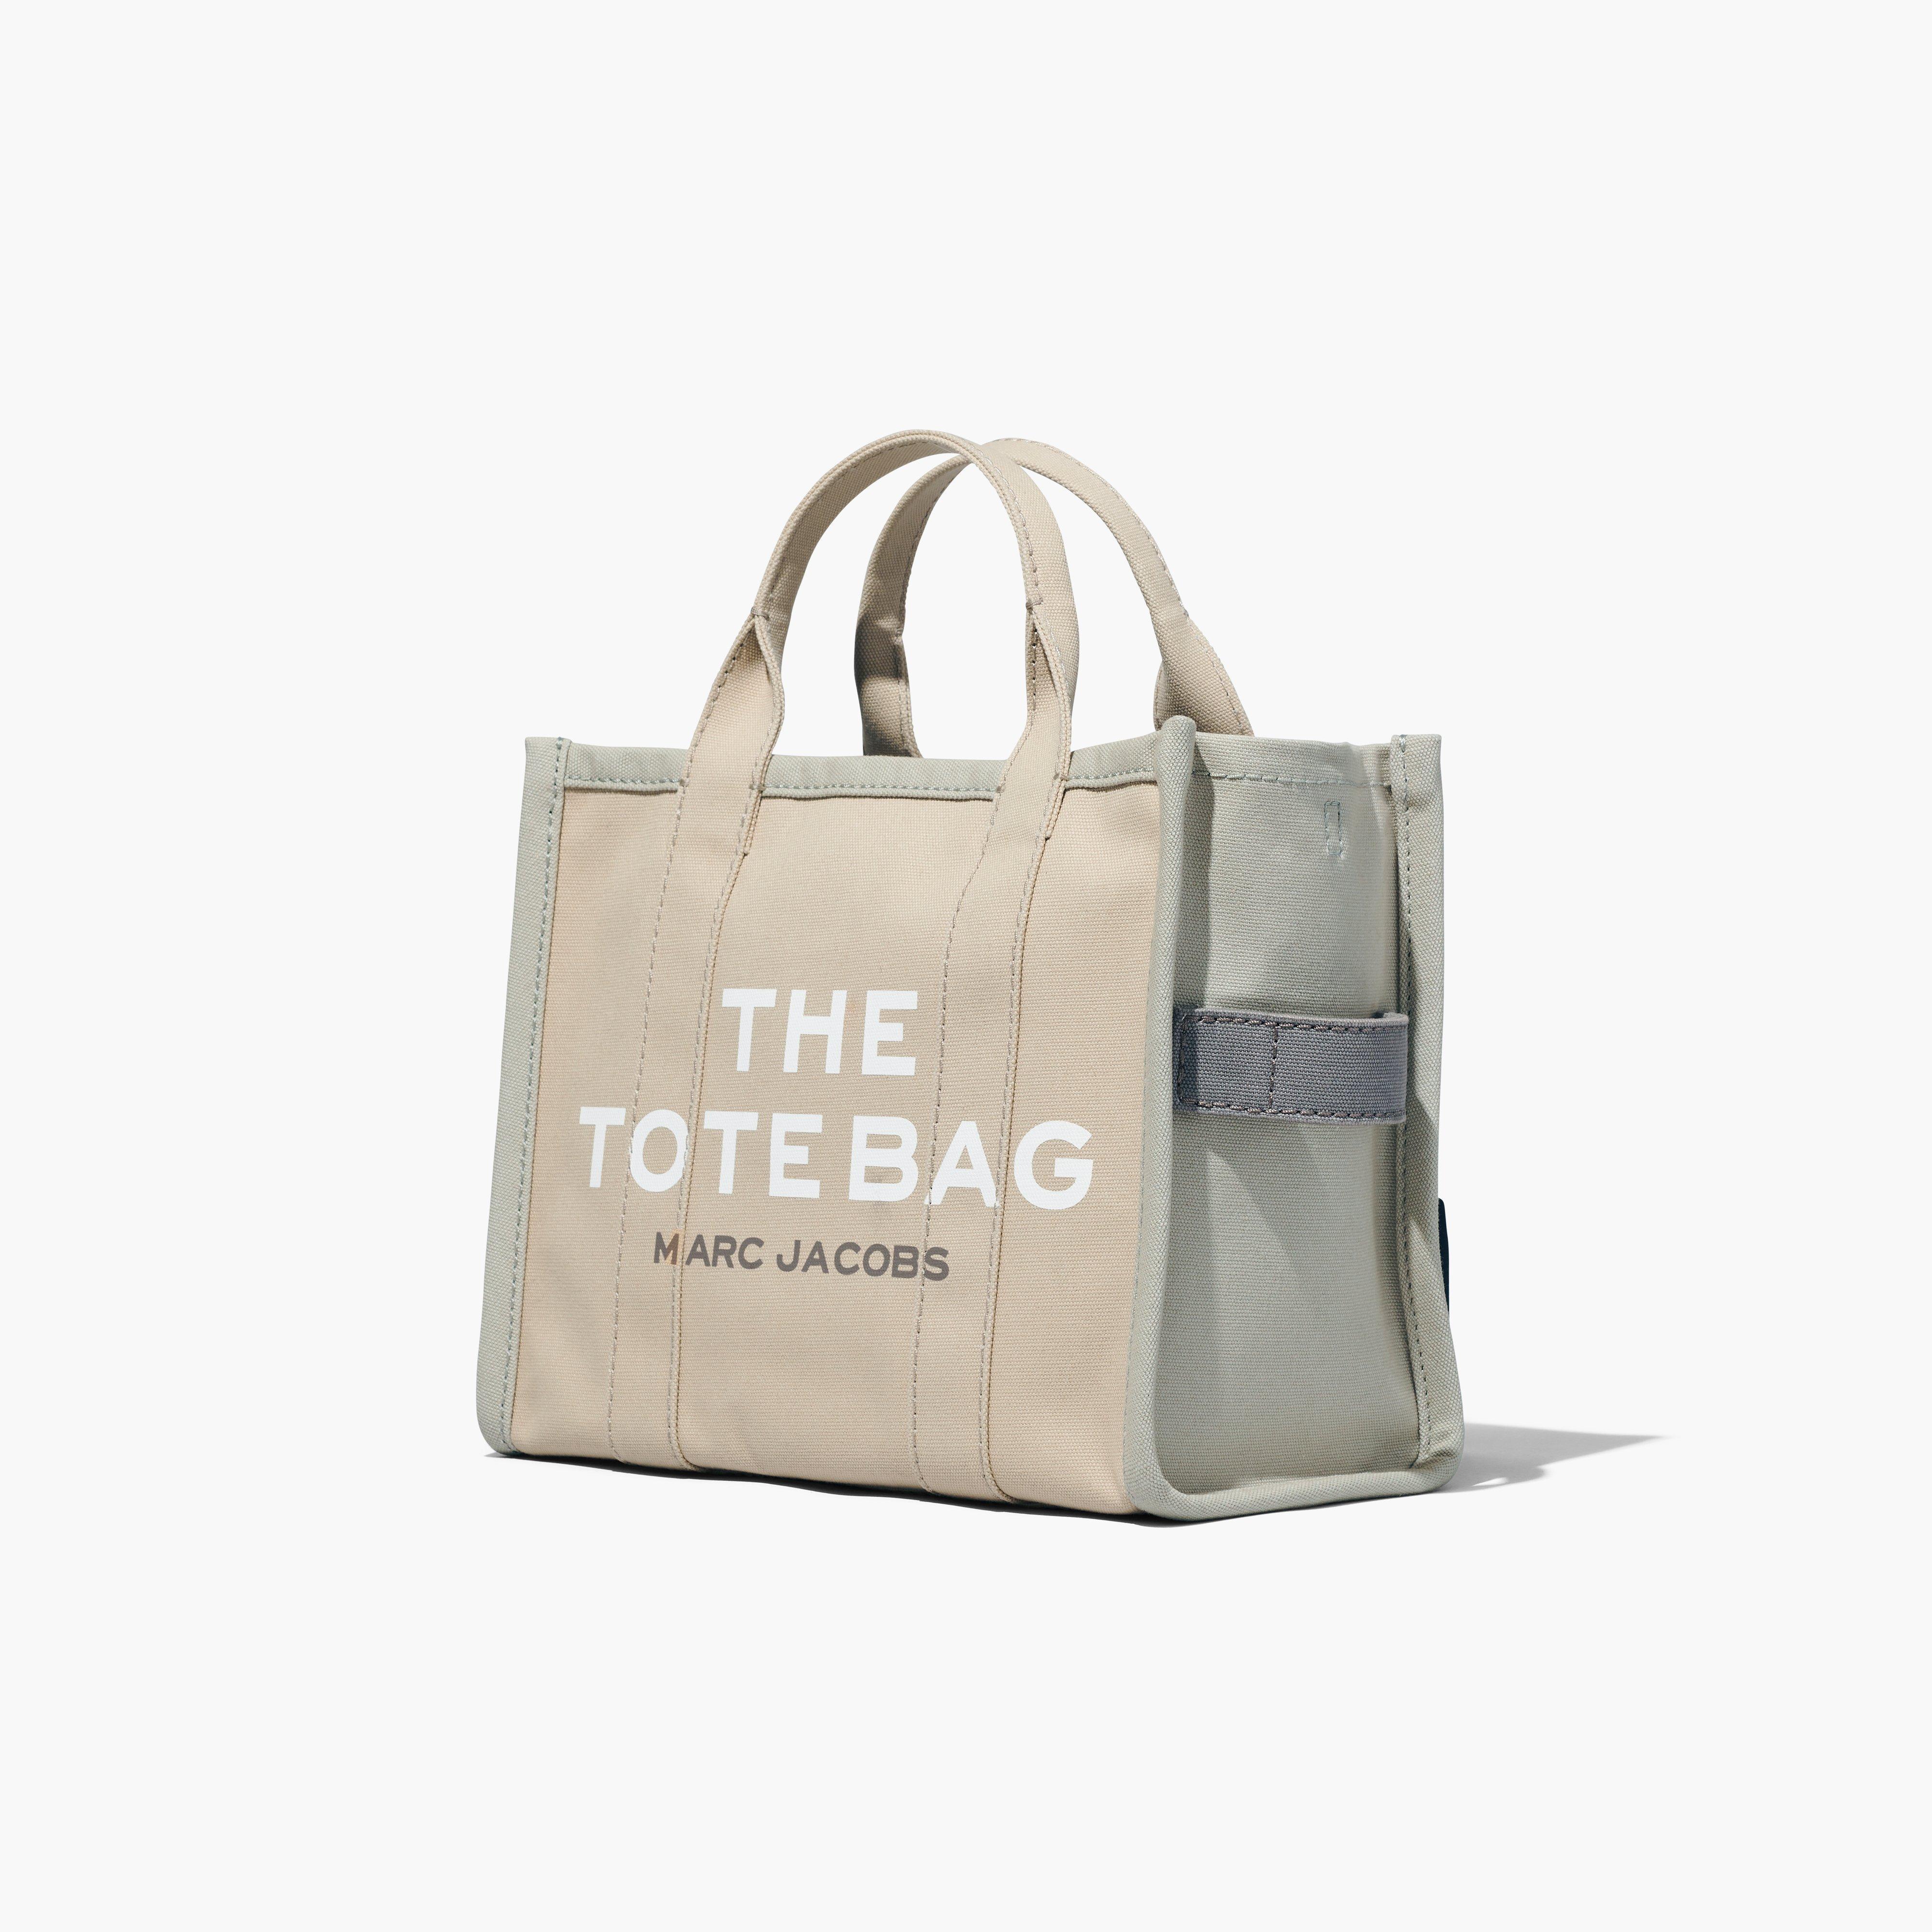 The Colorblock Small Tote Bag